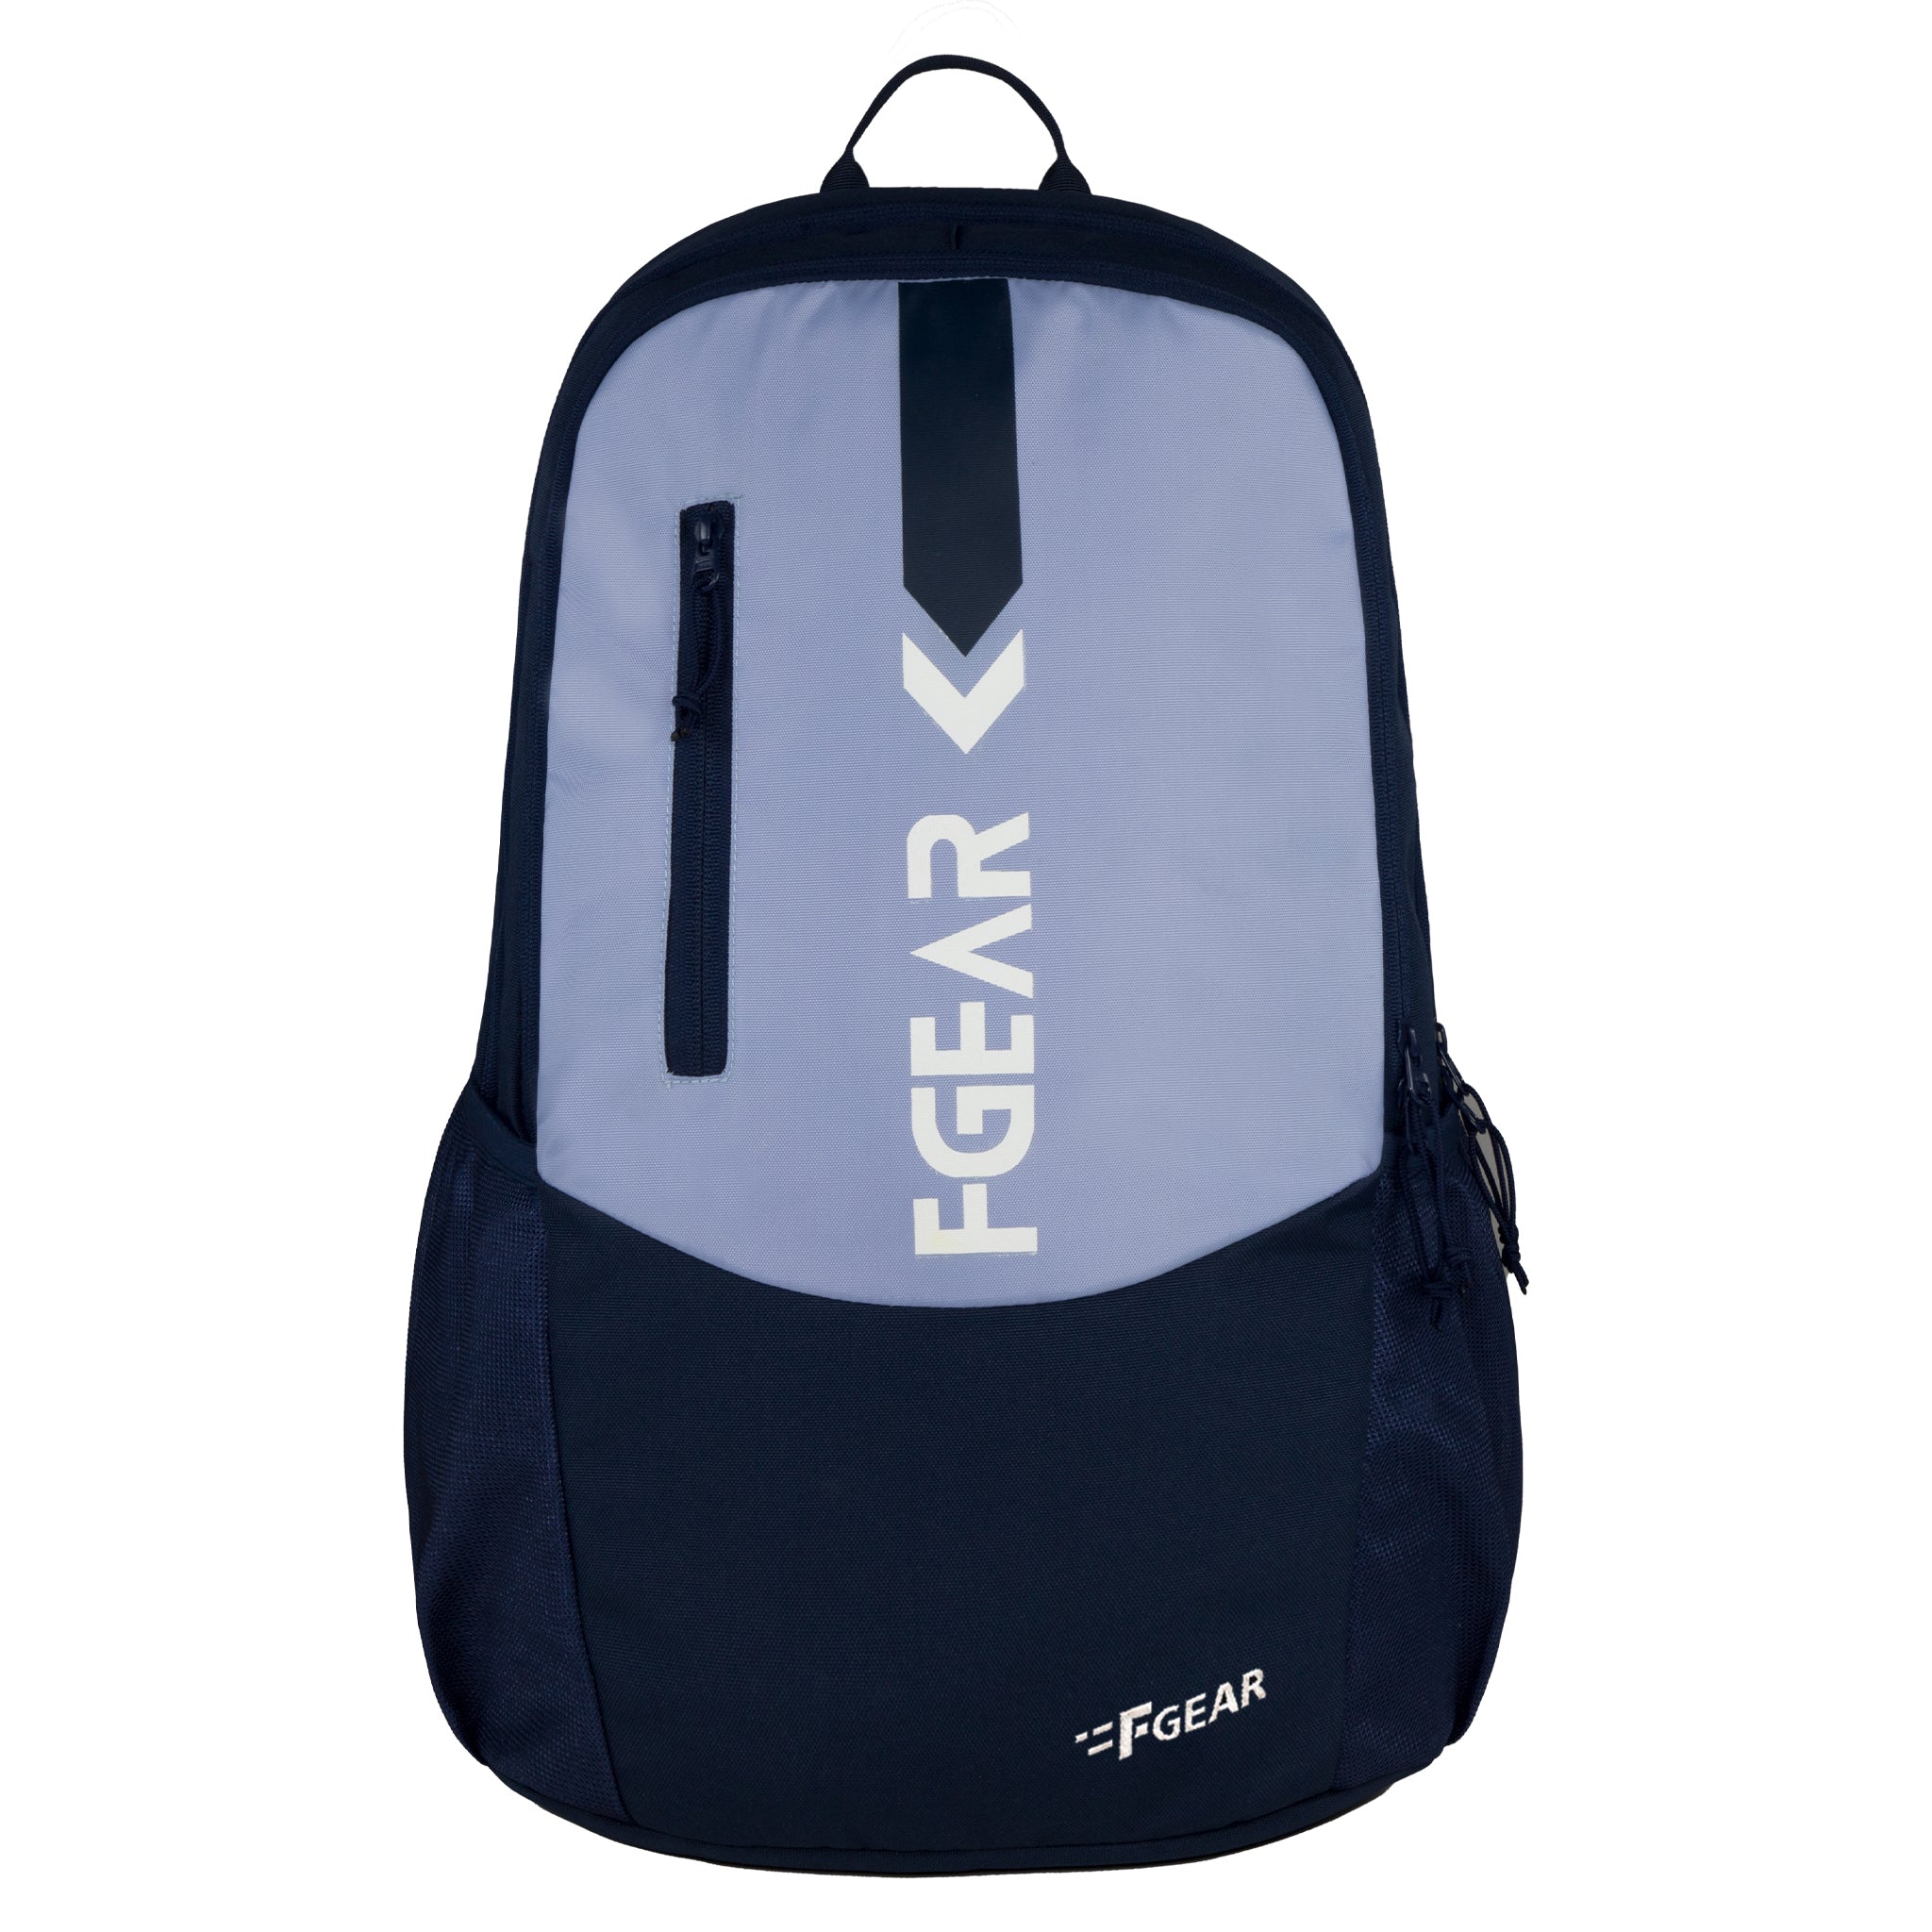 DZert Backpack Primary Bookbag | Casual Daypack | Bag | Travel Backpack |  College Bag | Tuition Bag | School Bag for Boys/Girls/Women|Small 15 Liters  | DesiDime